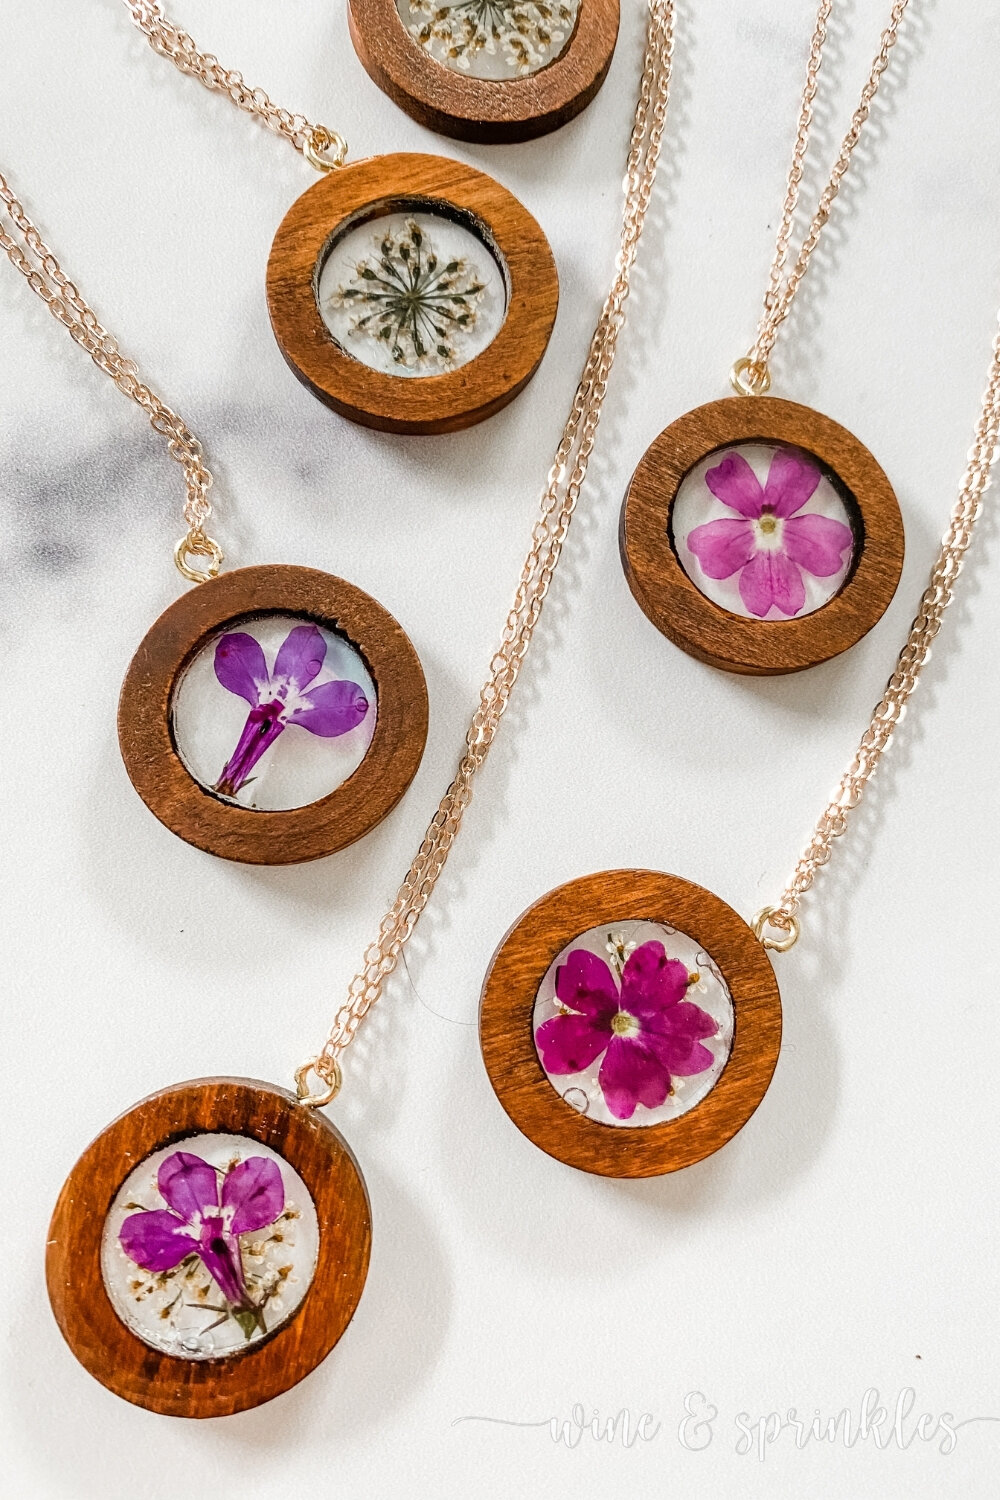 DIY Pressed Flower UV Resin Open Frame Pendant Necklaces